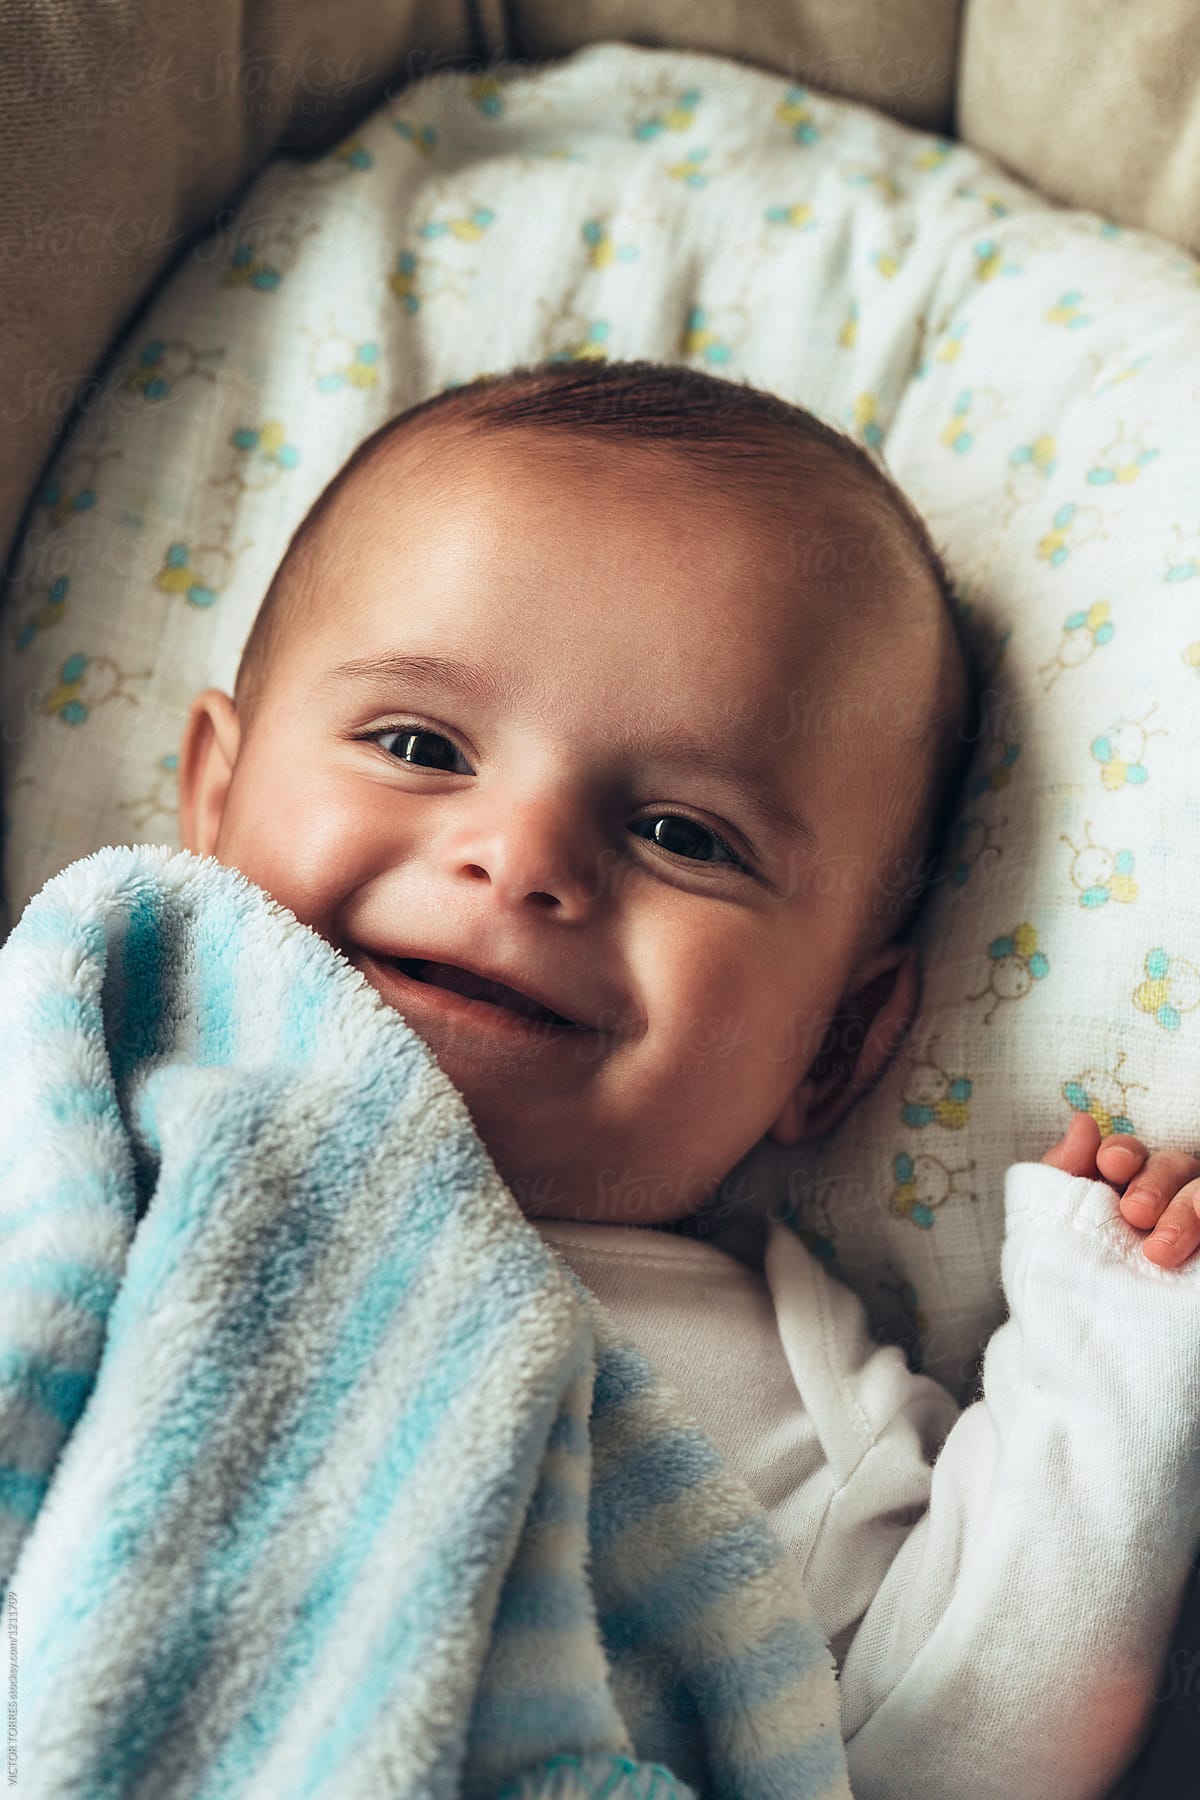 smiling newborn baby boy